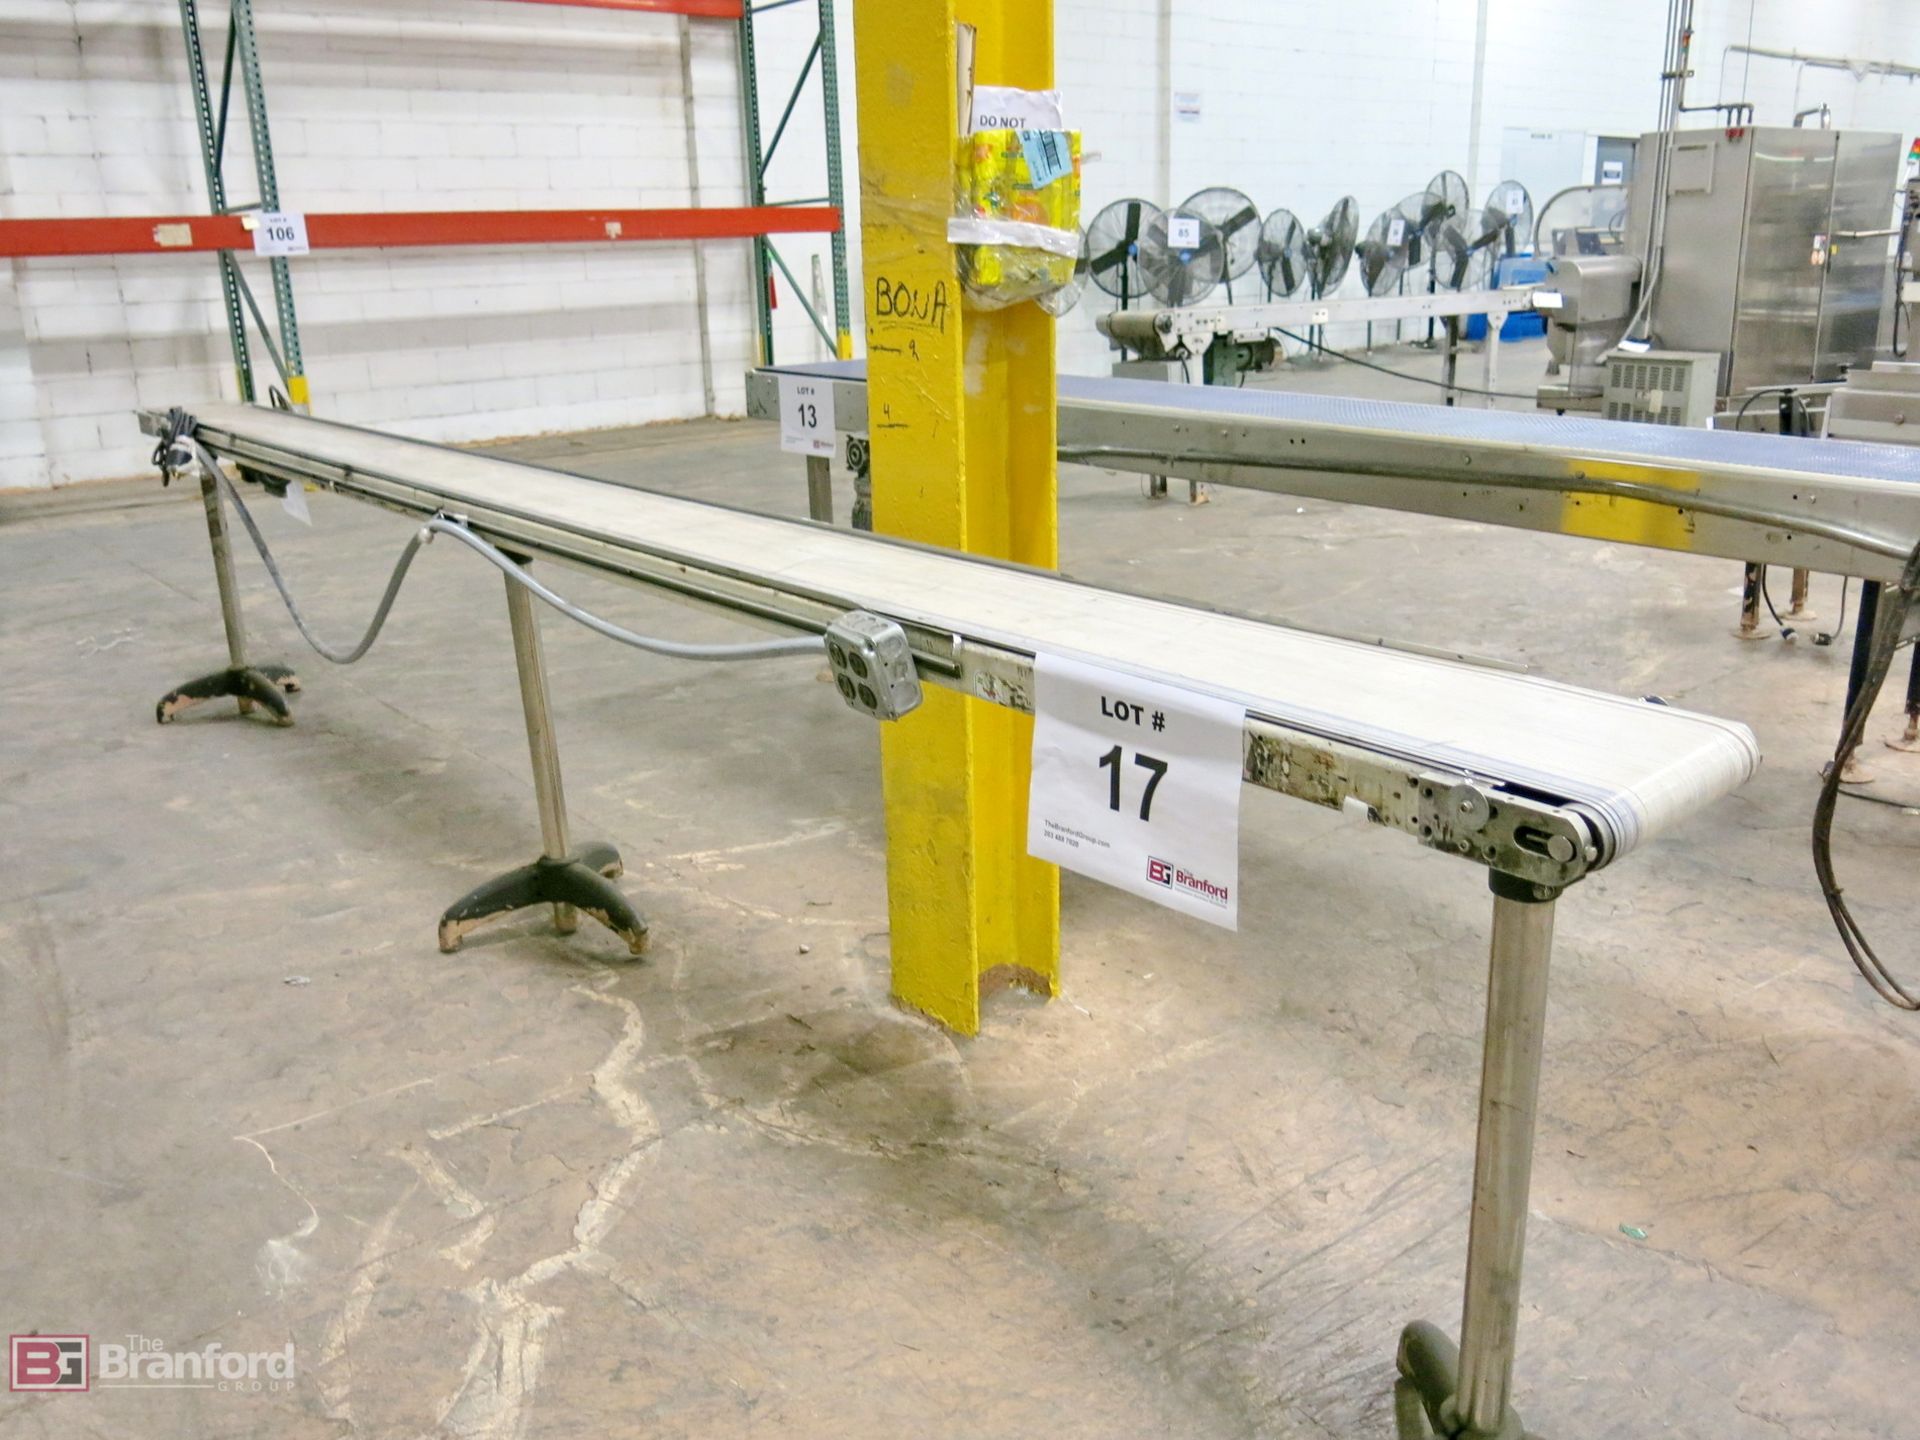 Approx. 13' x 9" motorized belt conveyor